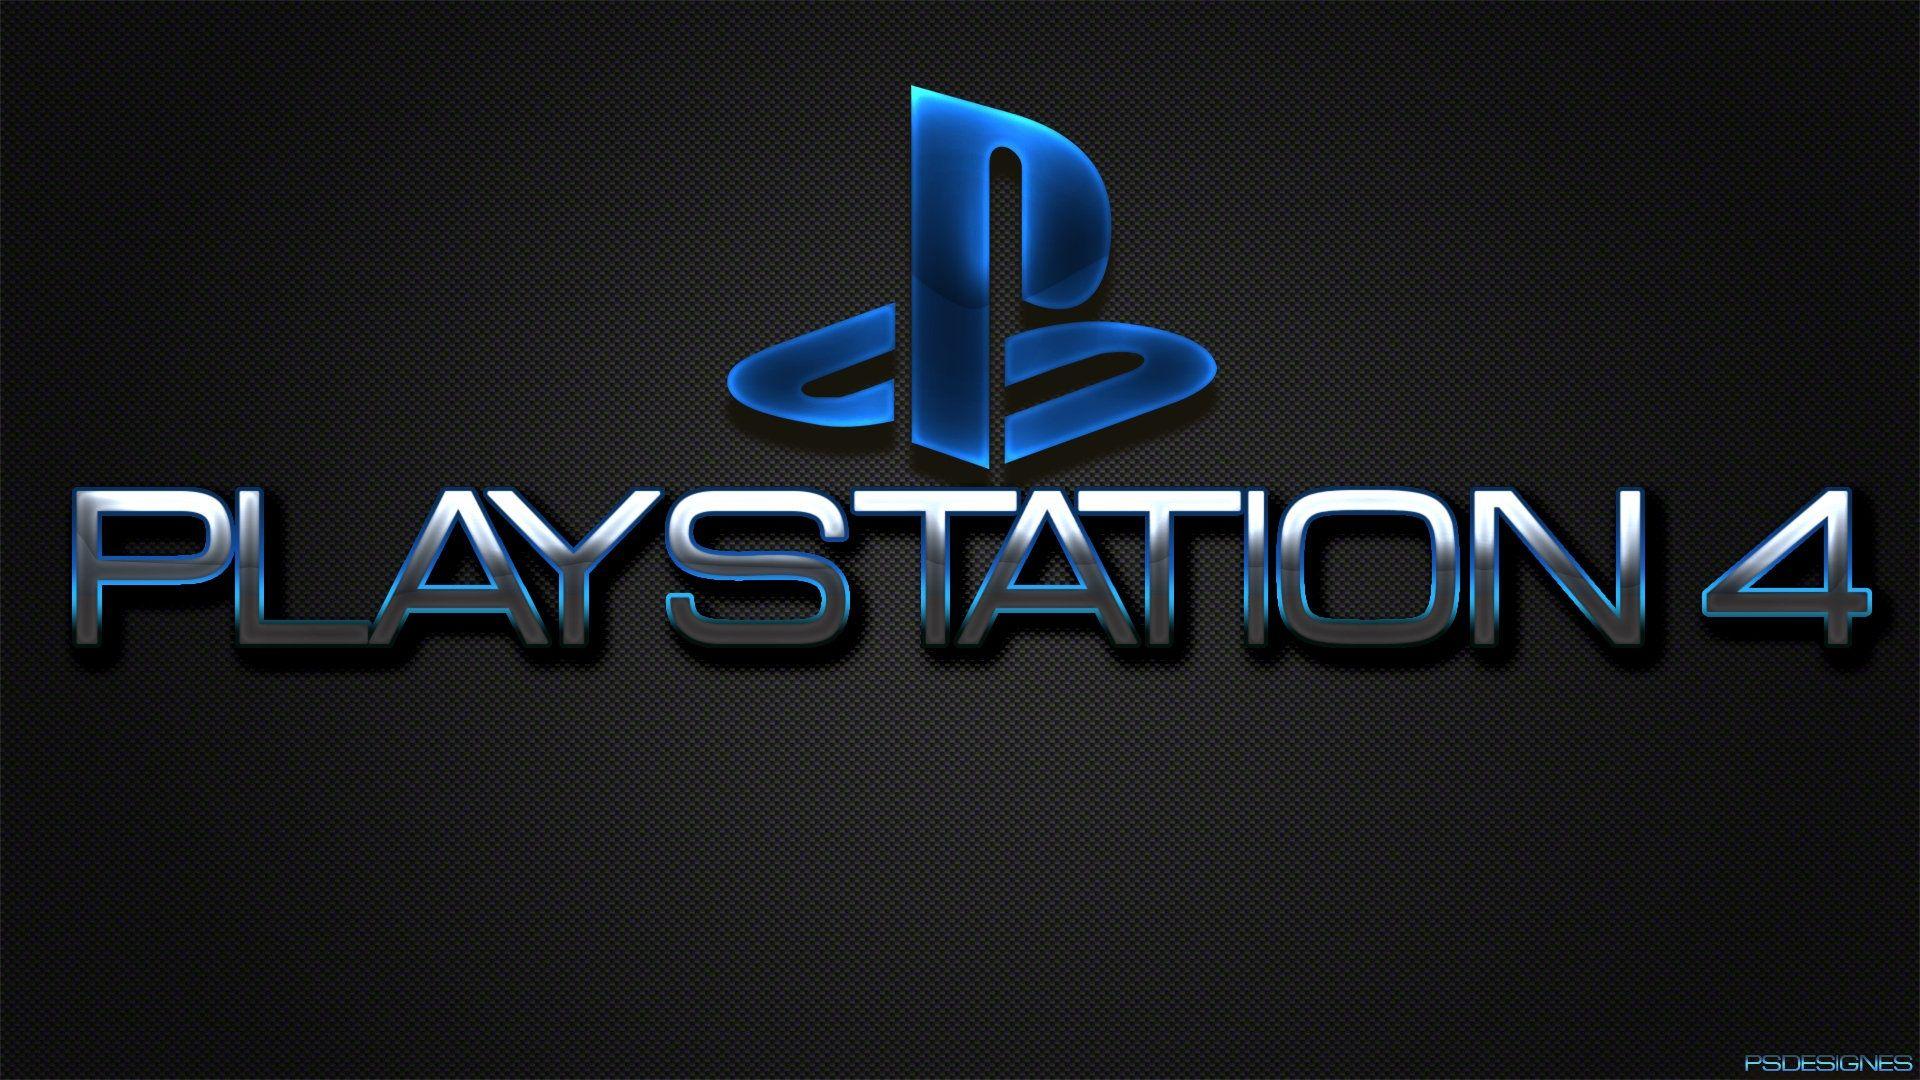 Playstation 4 logo, Sony wallpaper. brands and logos